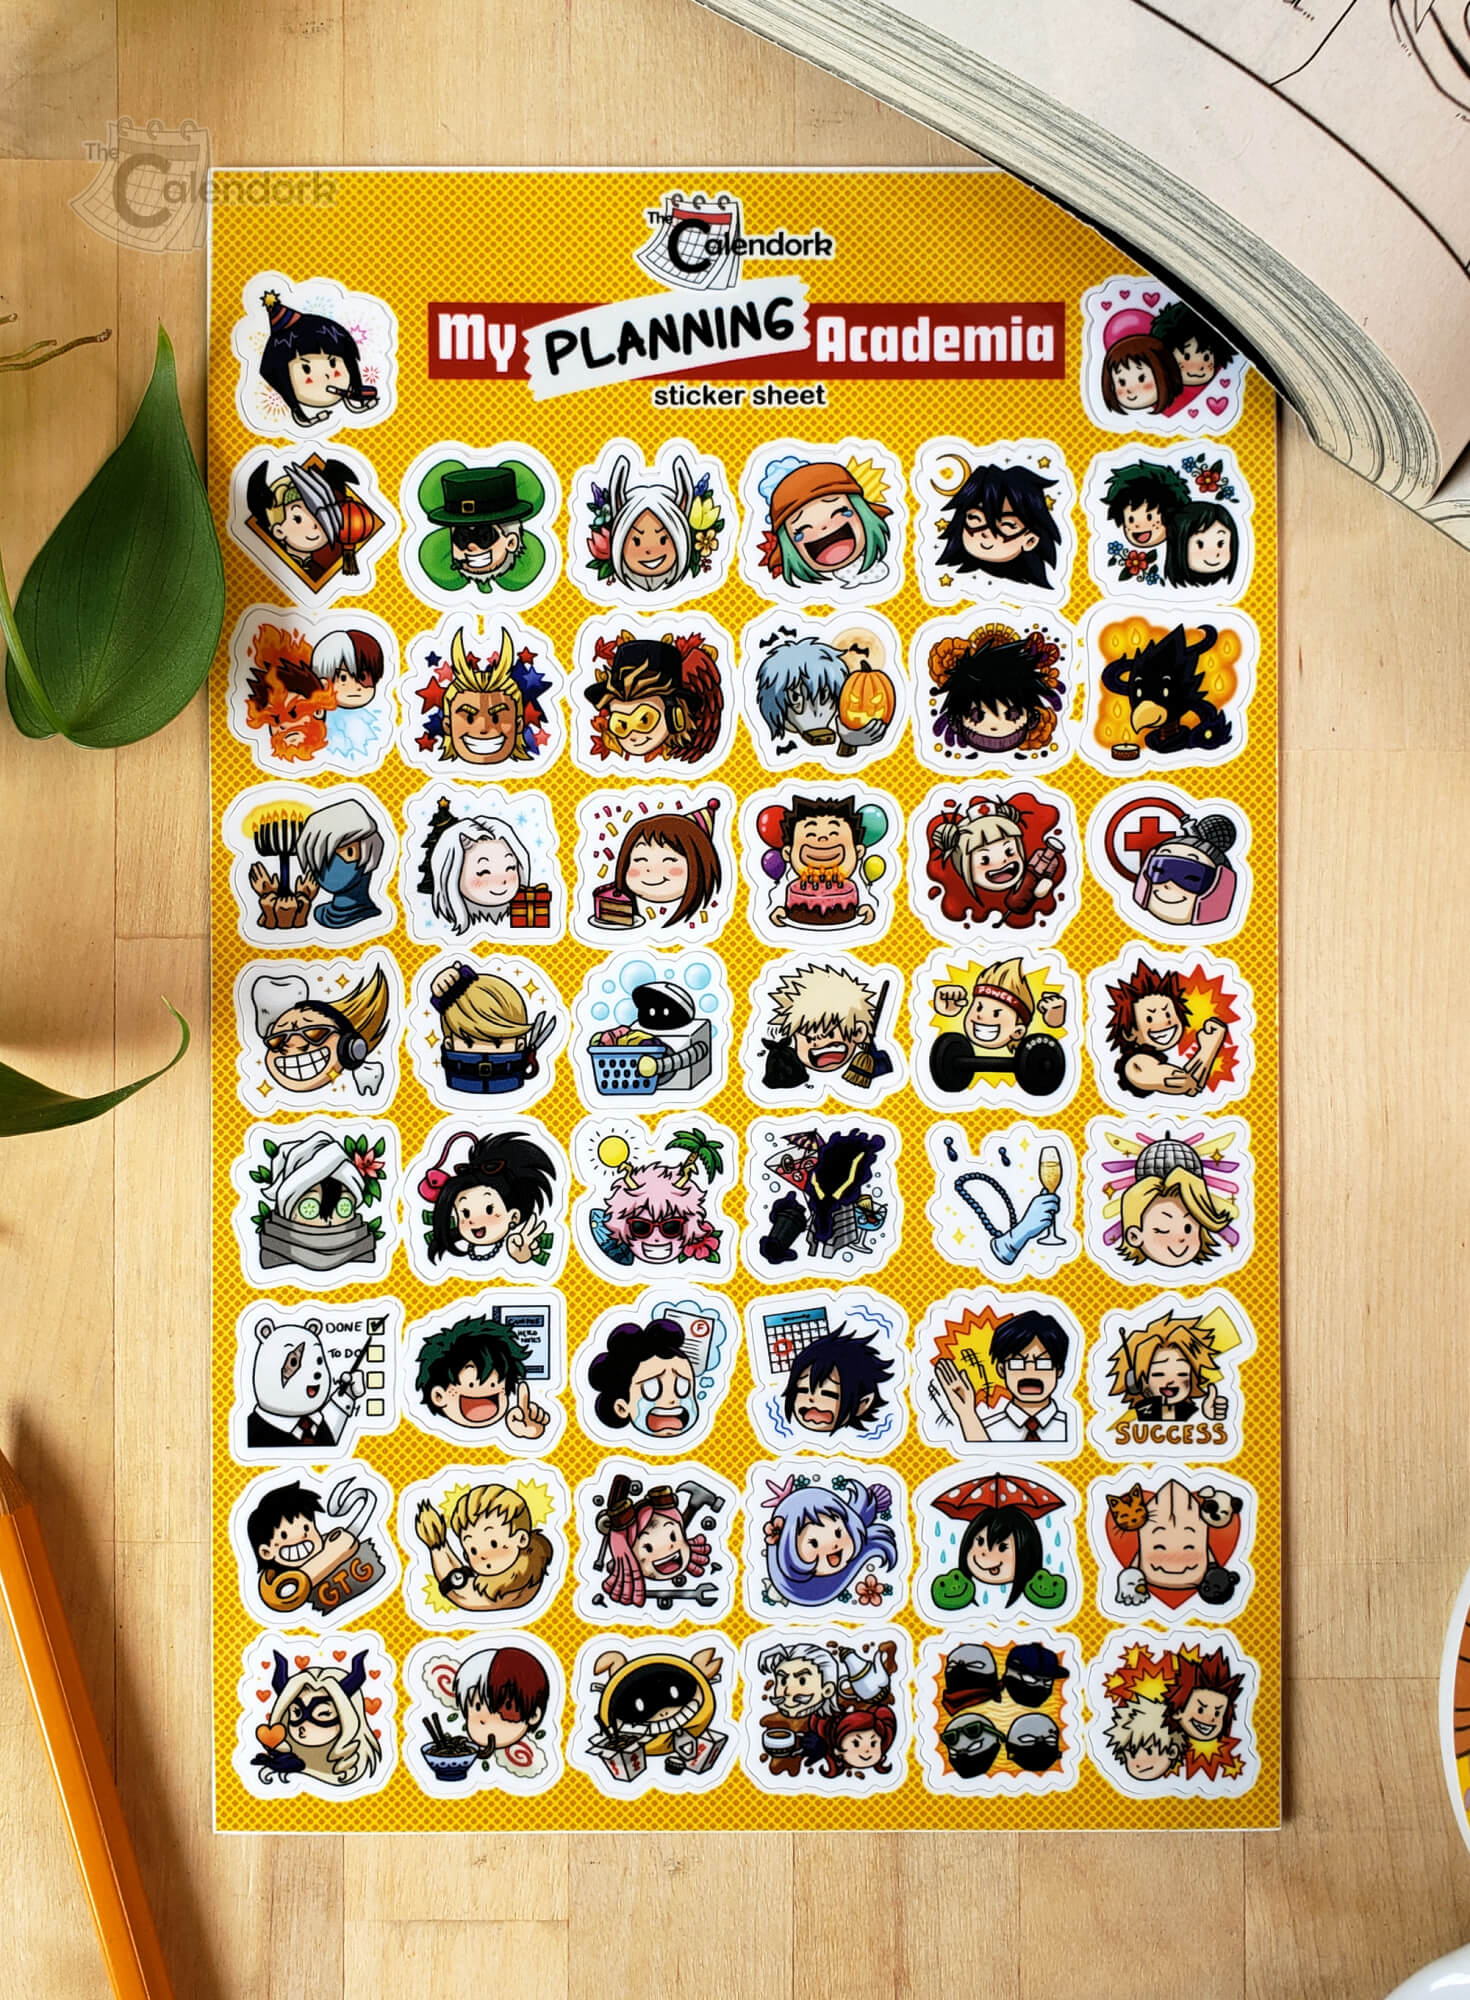 One Piece Planning Sticker Sheet – The Calendork